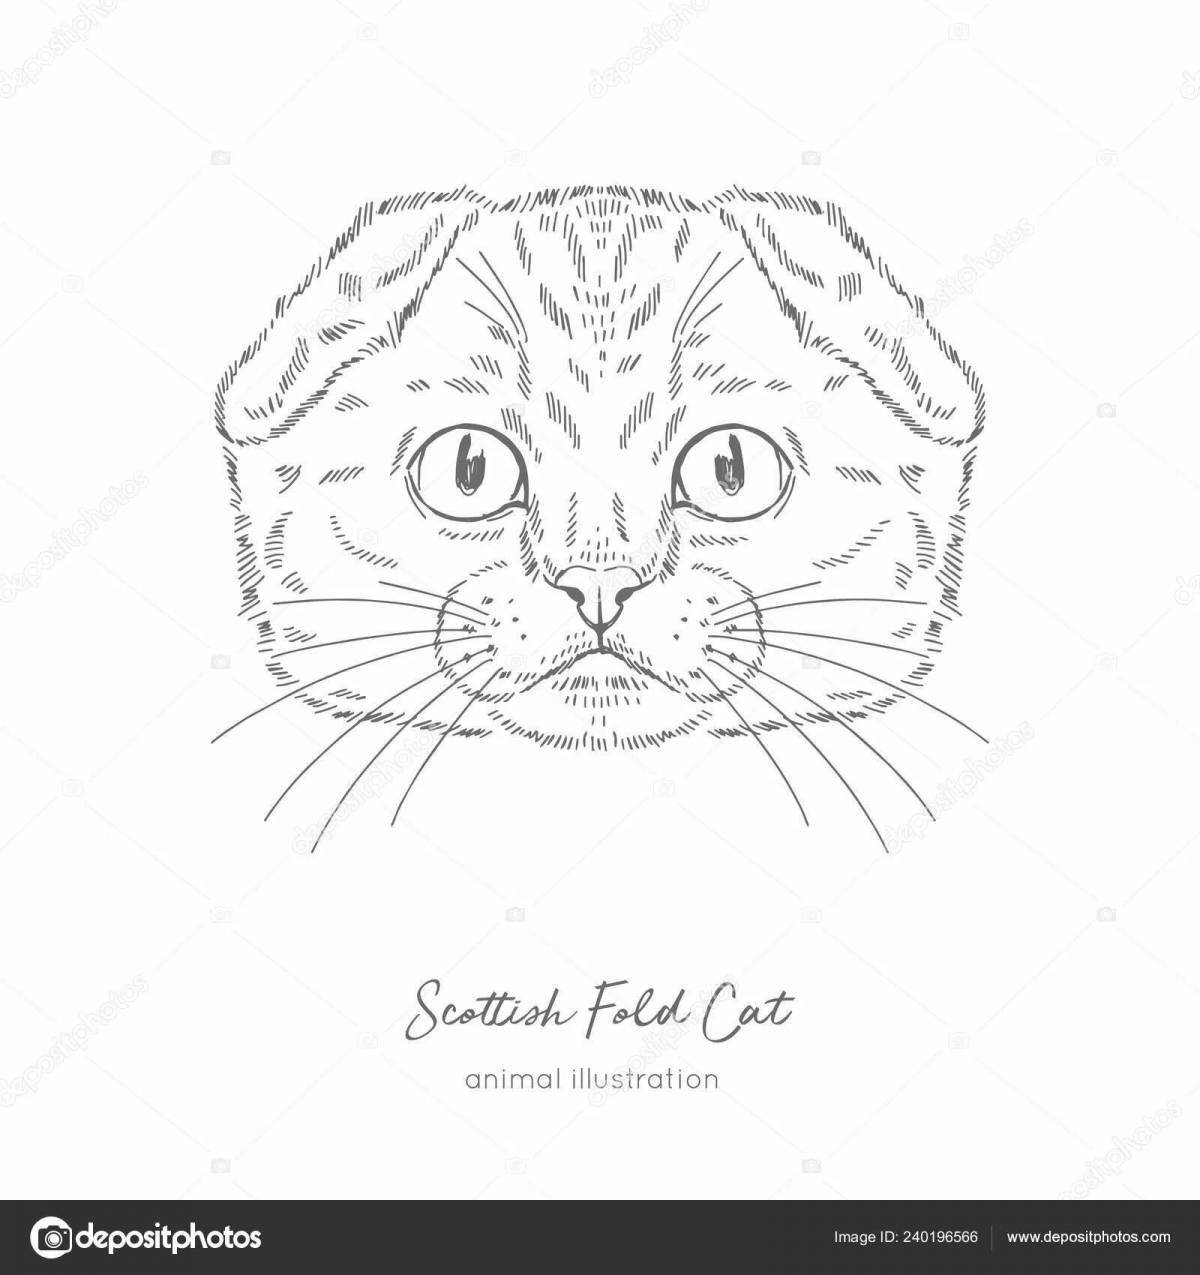 Colouring adorable scottish fold cat